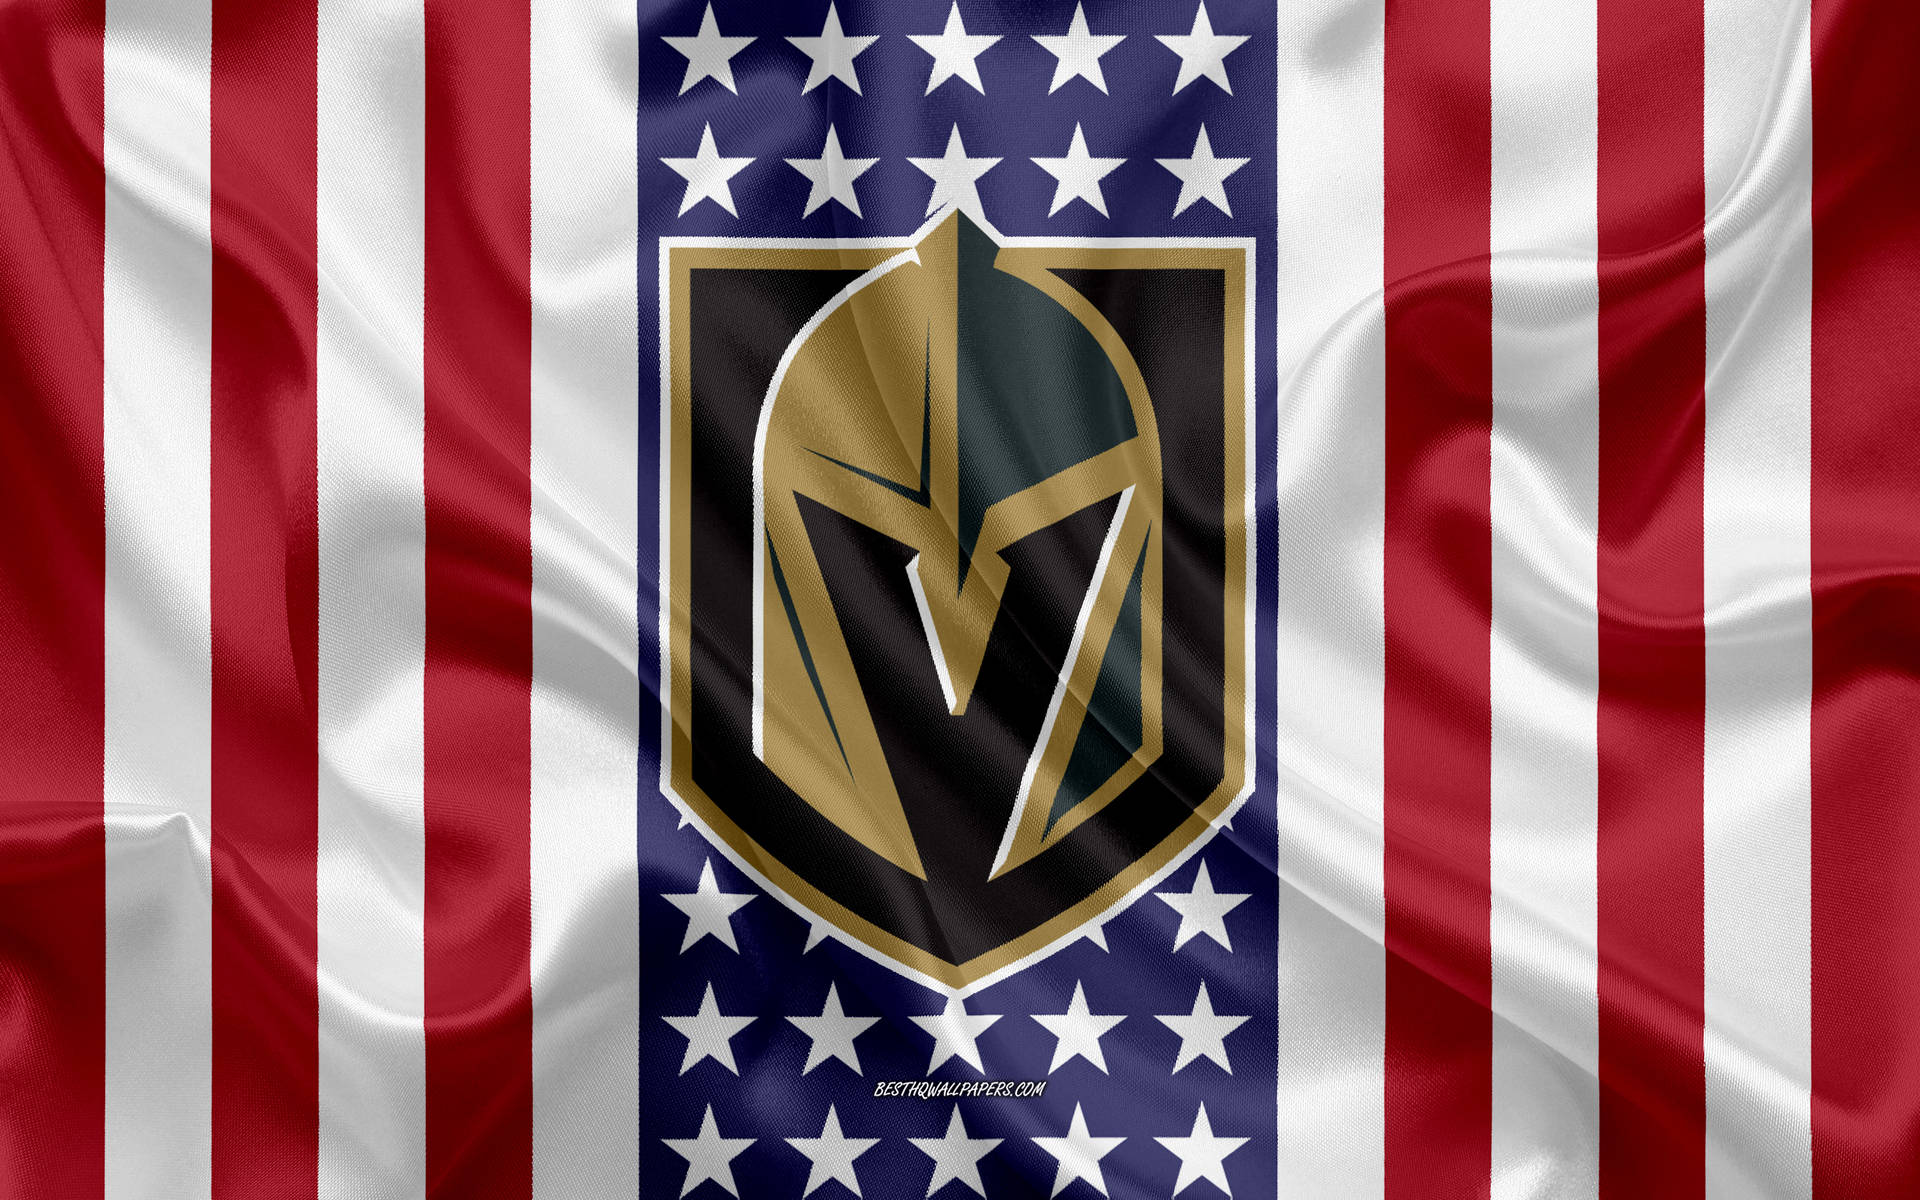 Vegas Golden Knights Emblem On US Flag Wallpaper